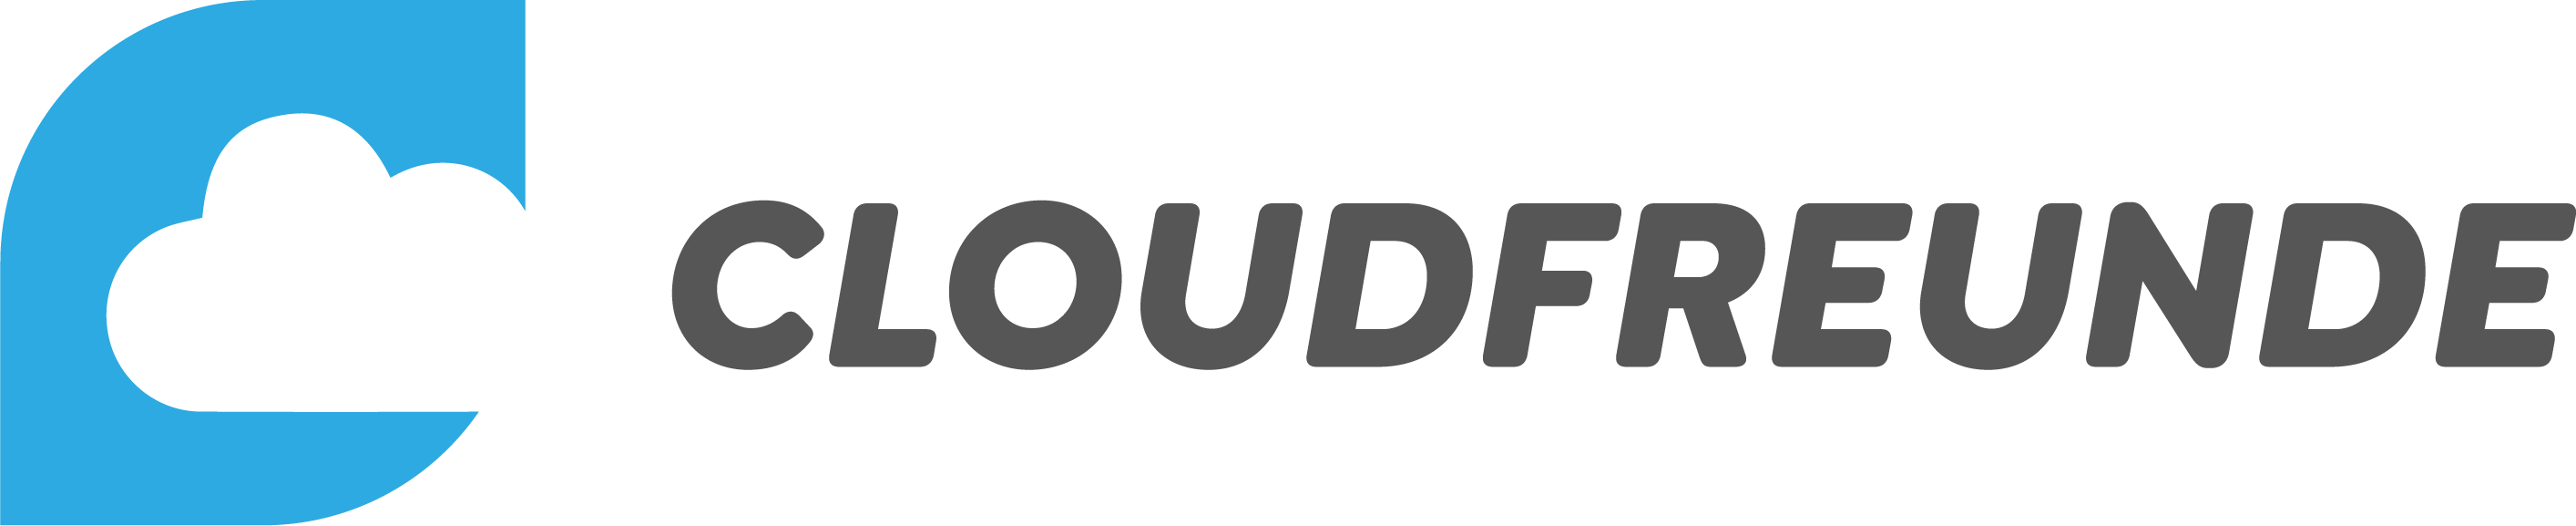 Cloudfreunde GmbH Logo